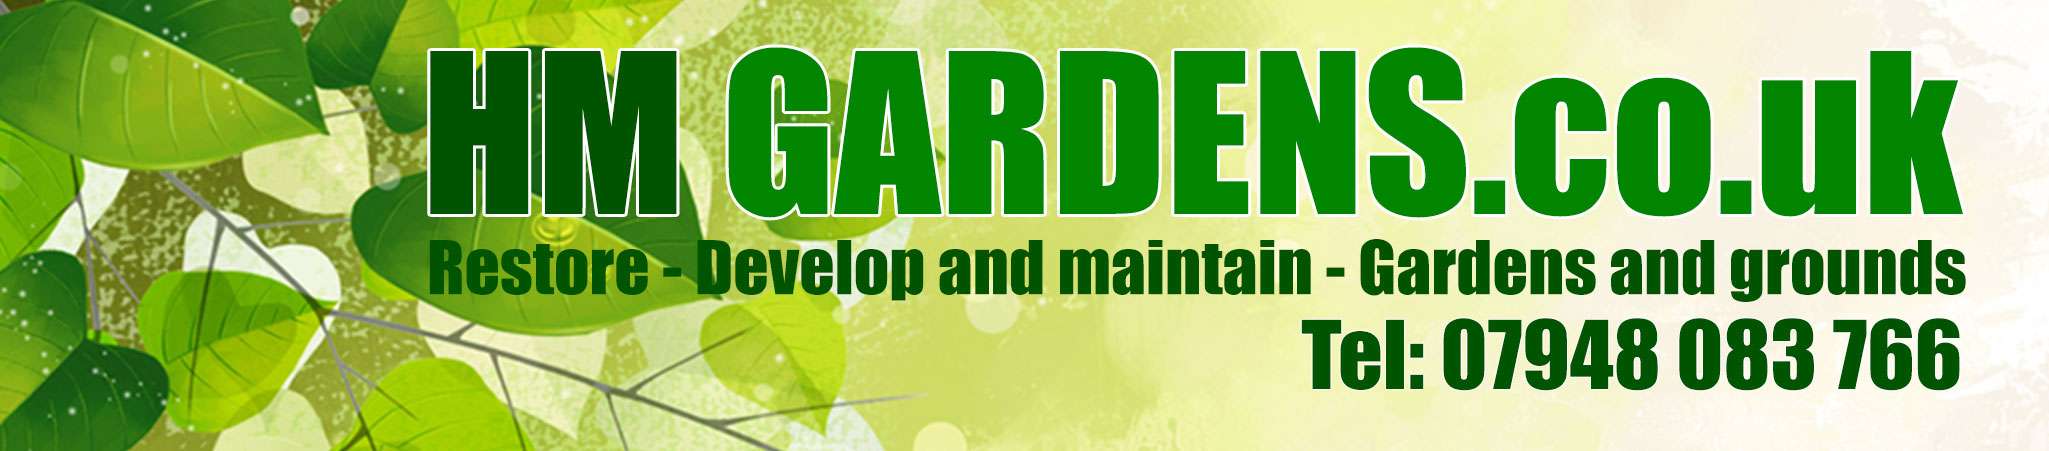 hm gardening services london